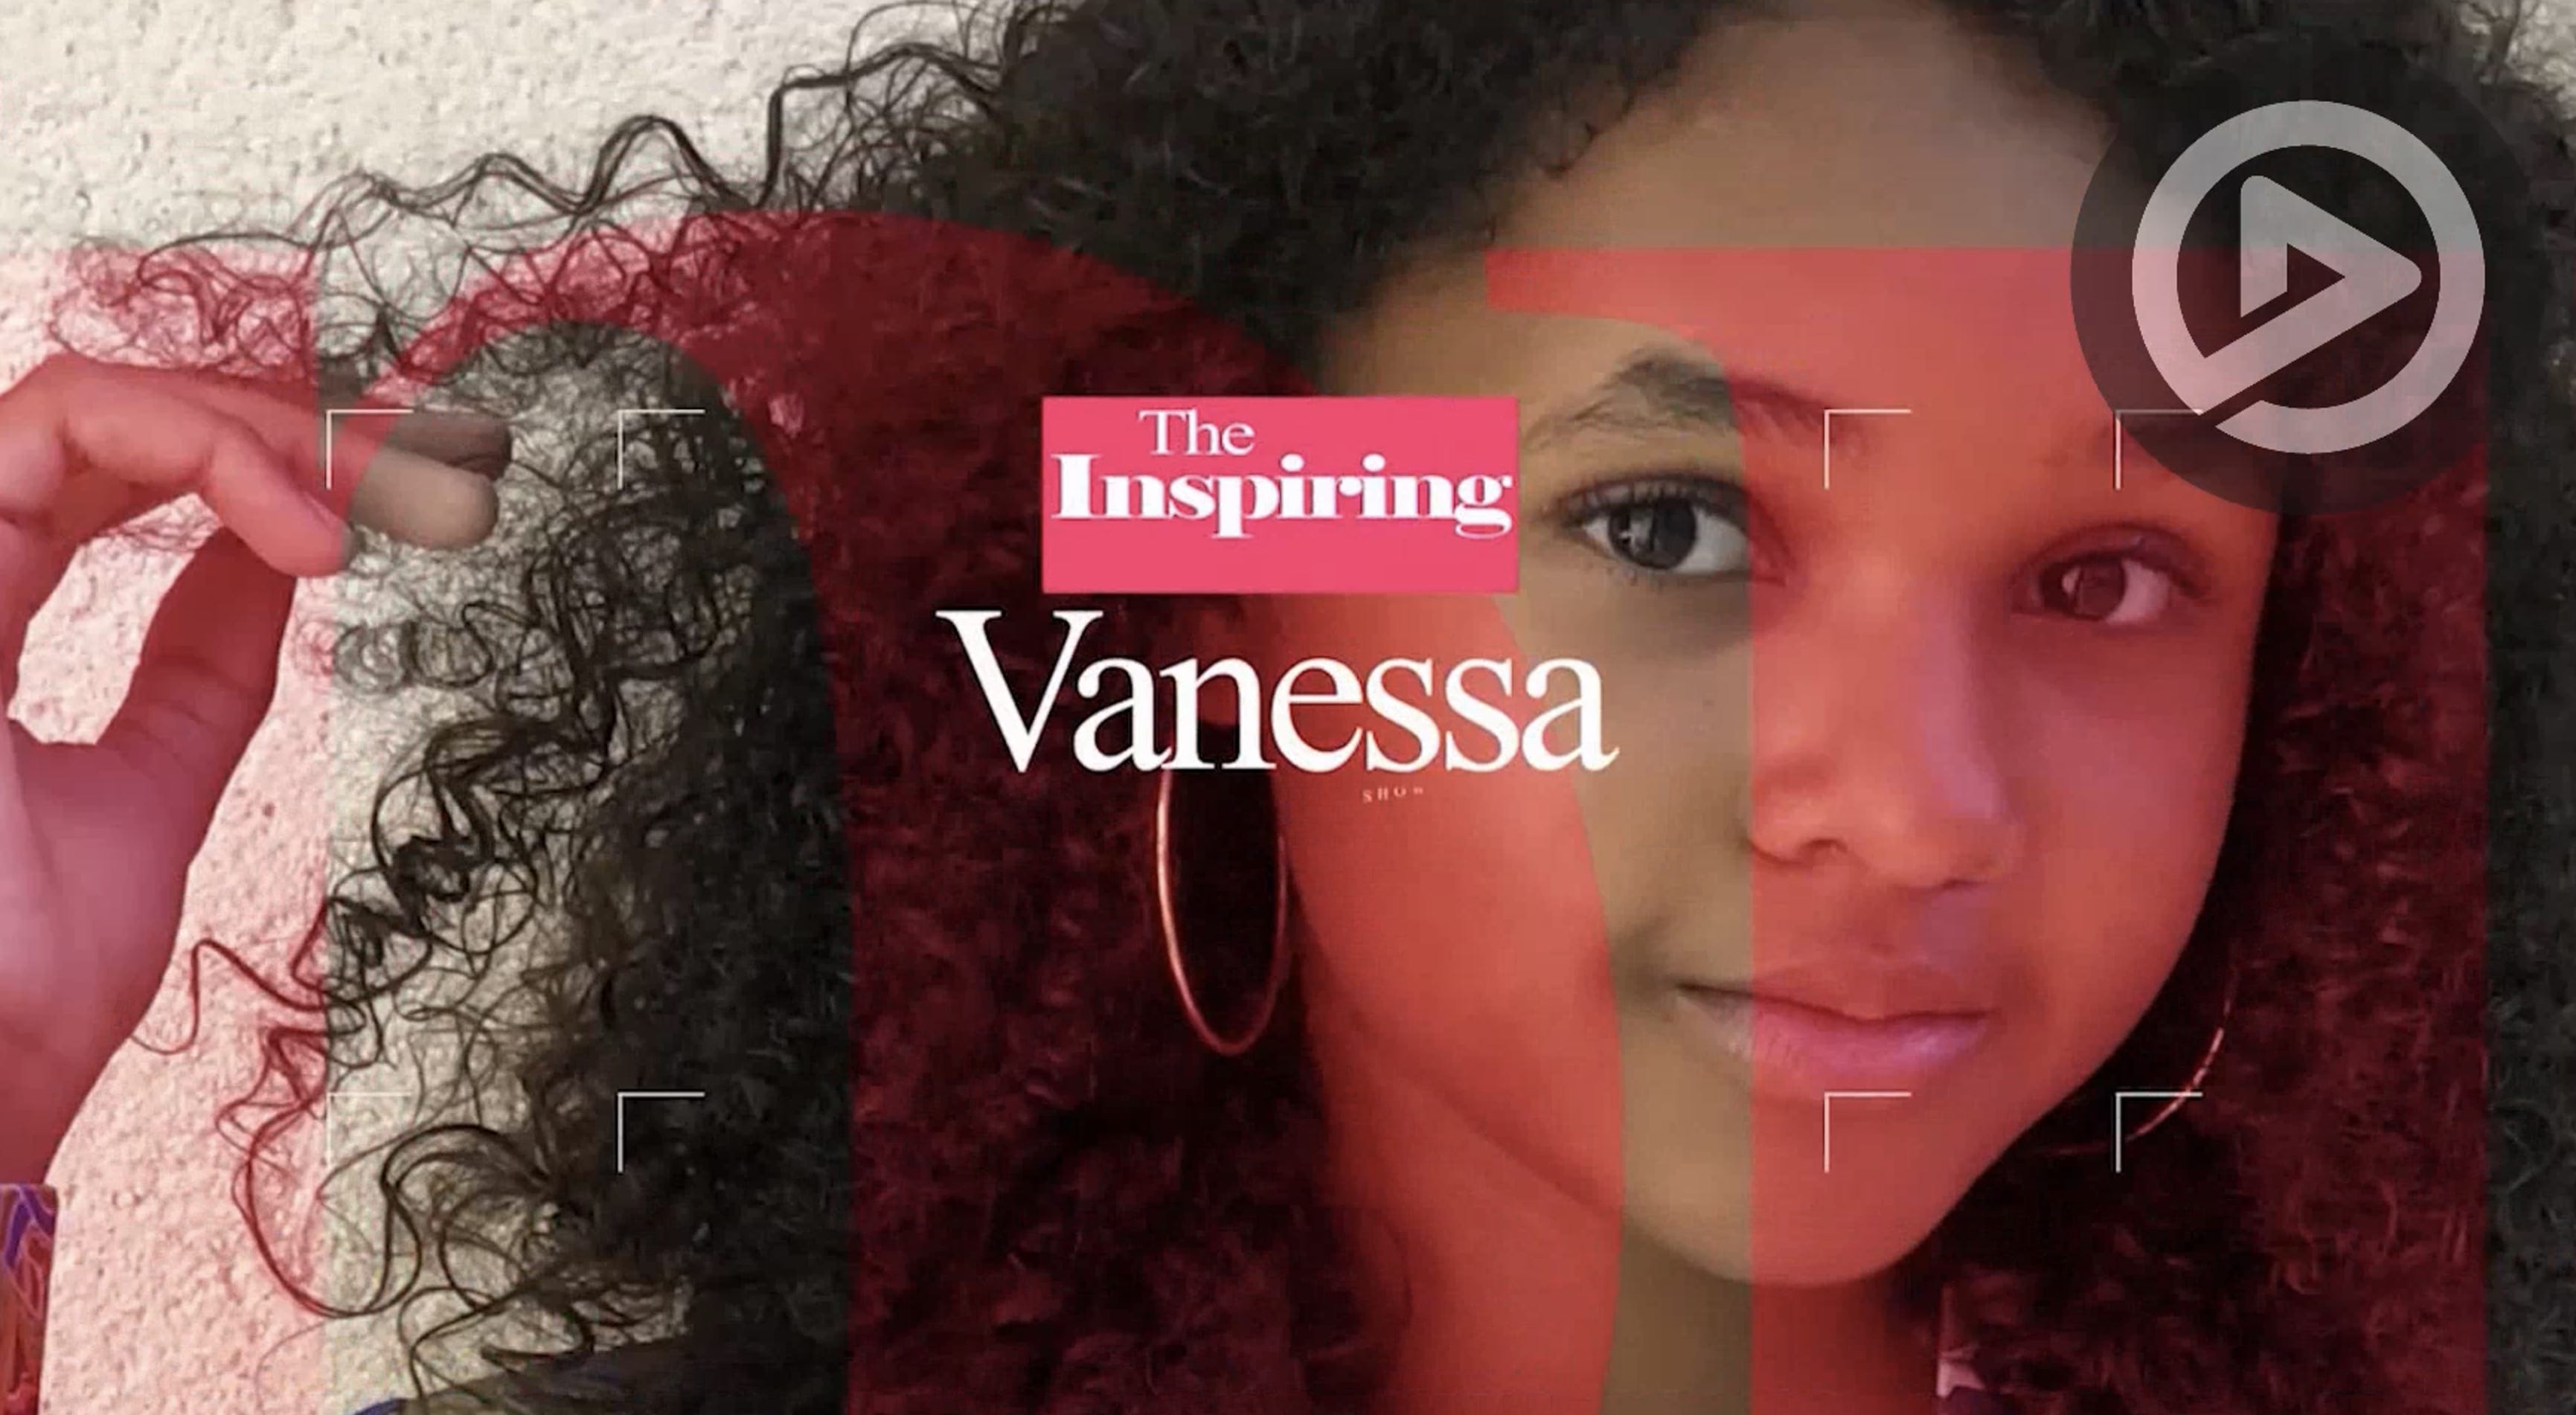 The Inspiring Vanessa Show